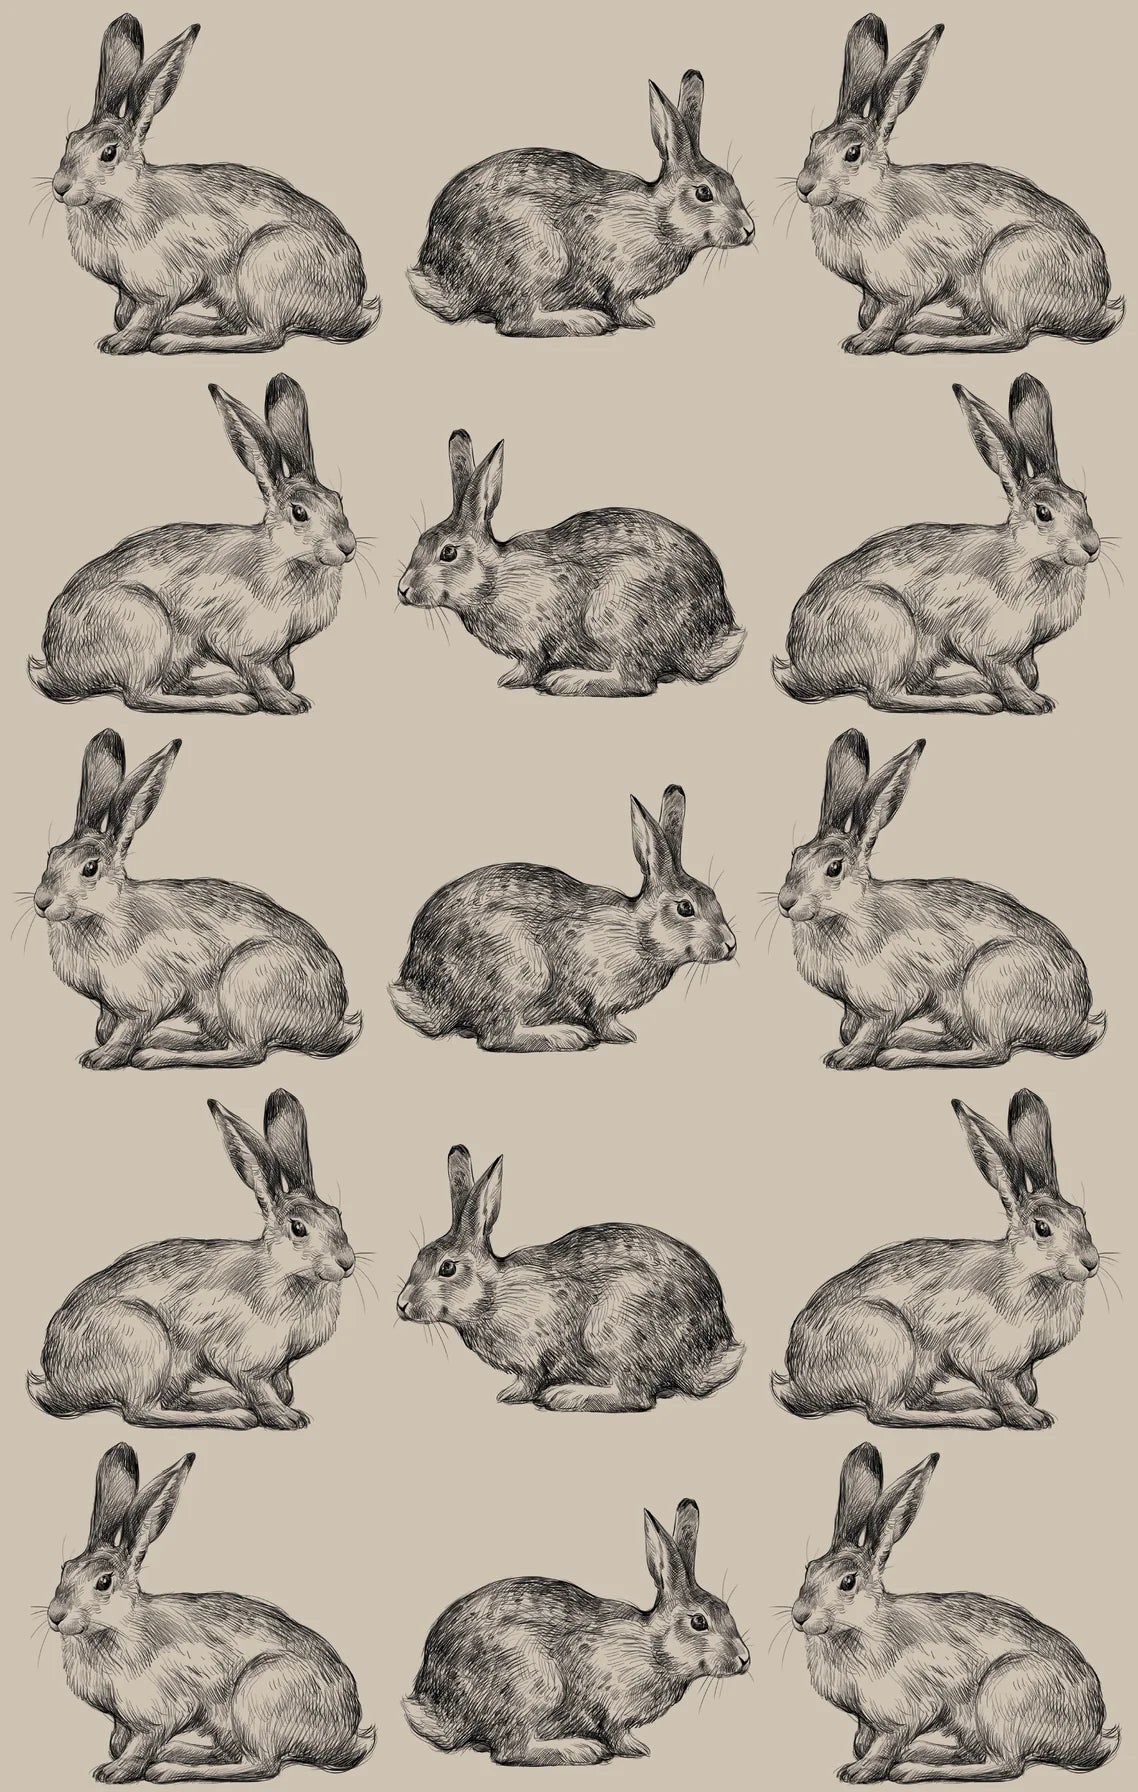 Tea Towel // Hares